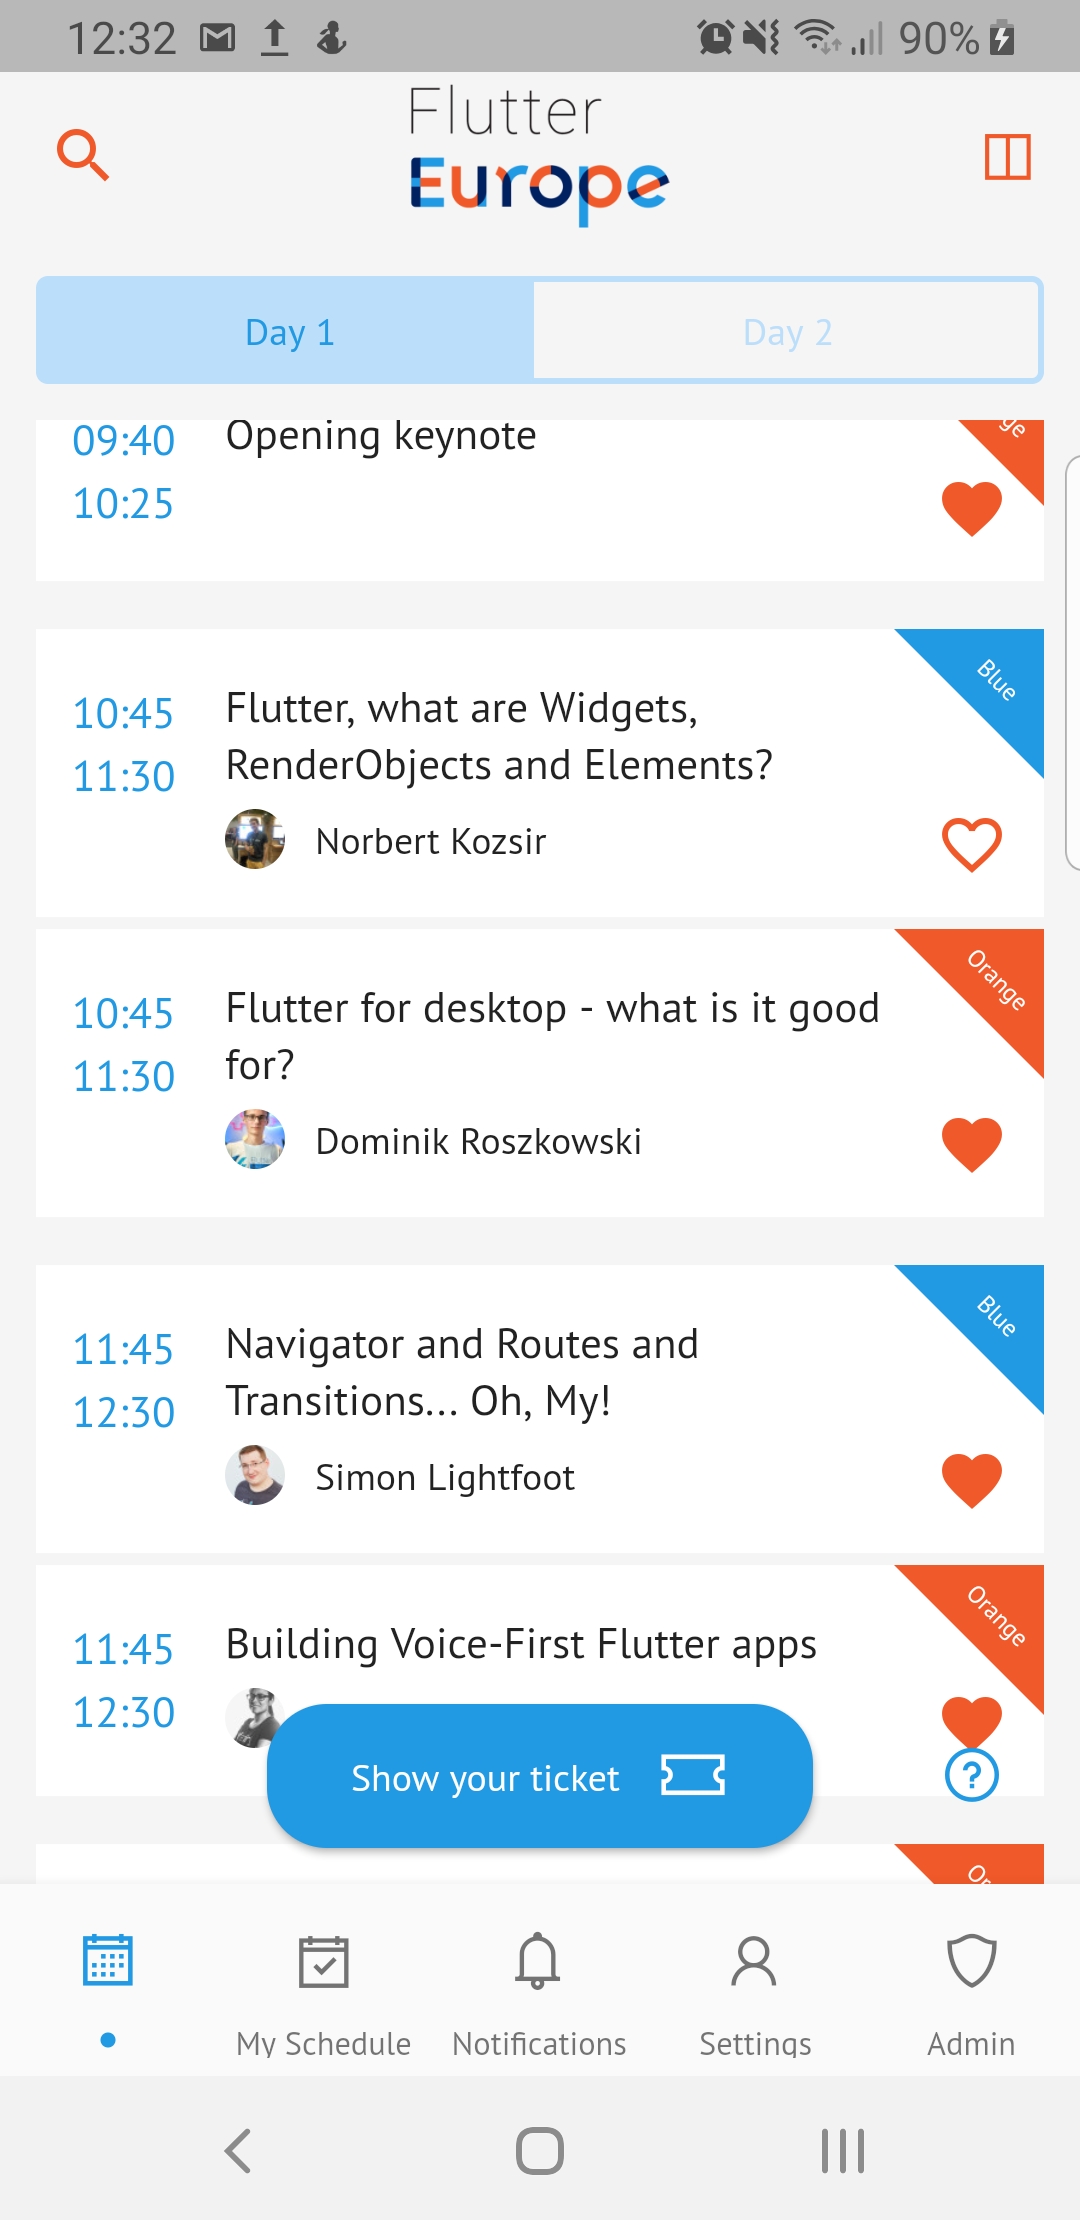 Official mobile app of Flutter Europe 2020 conference